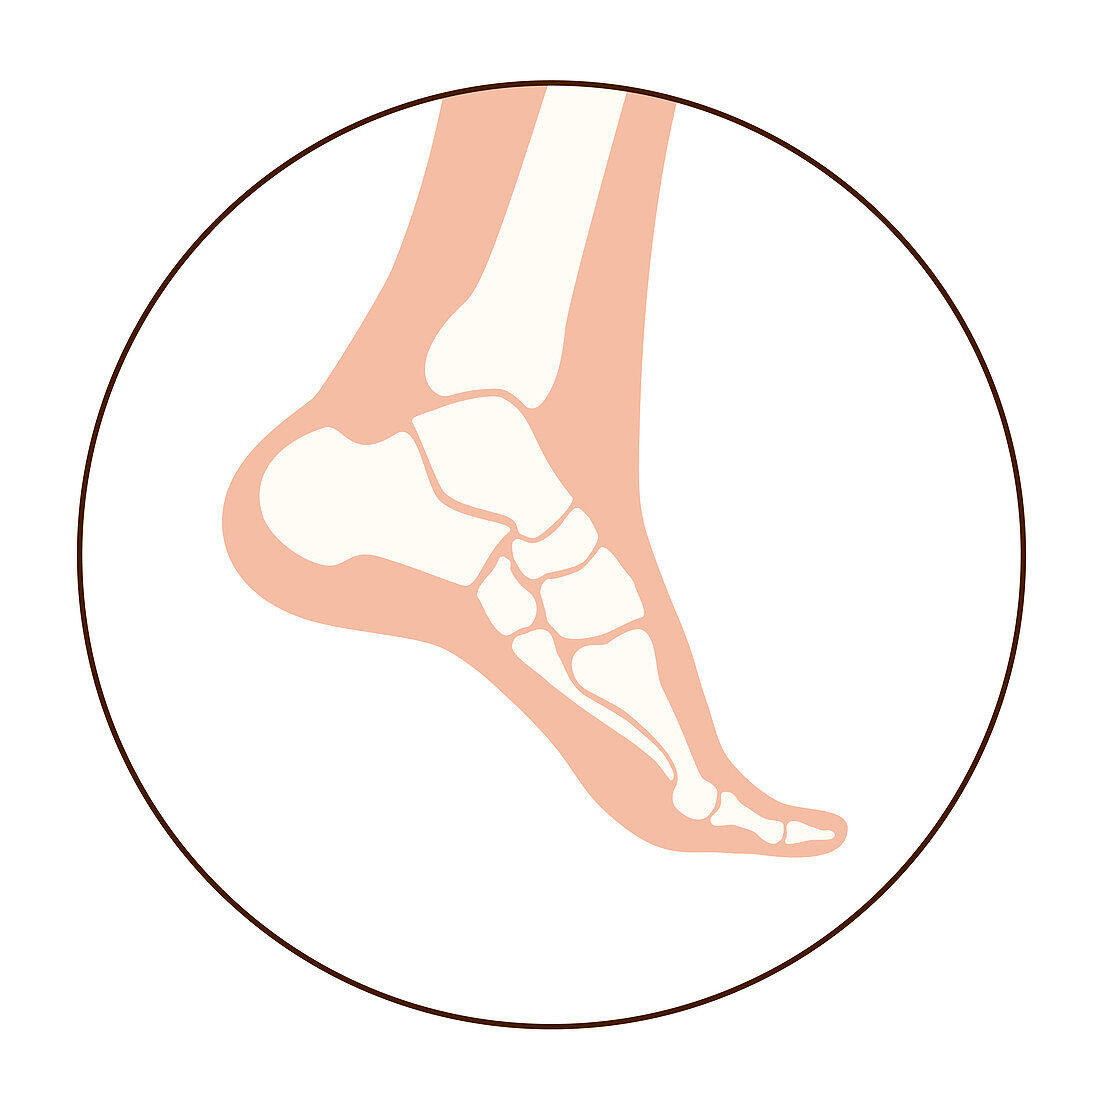 Foot and ankle bones, illustration